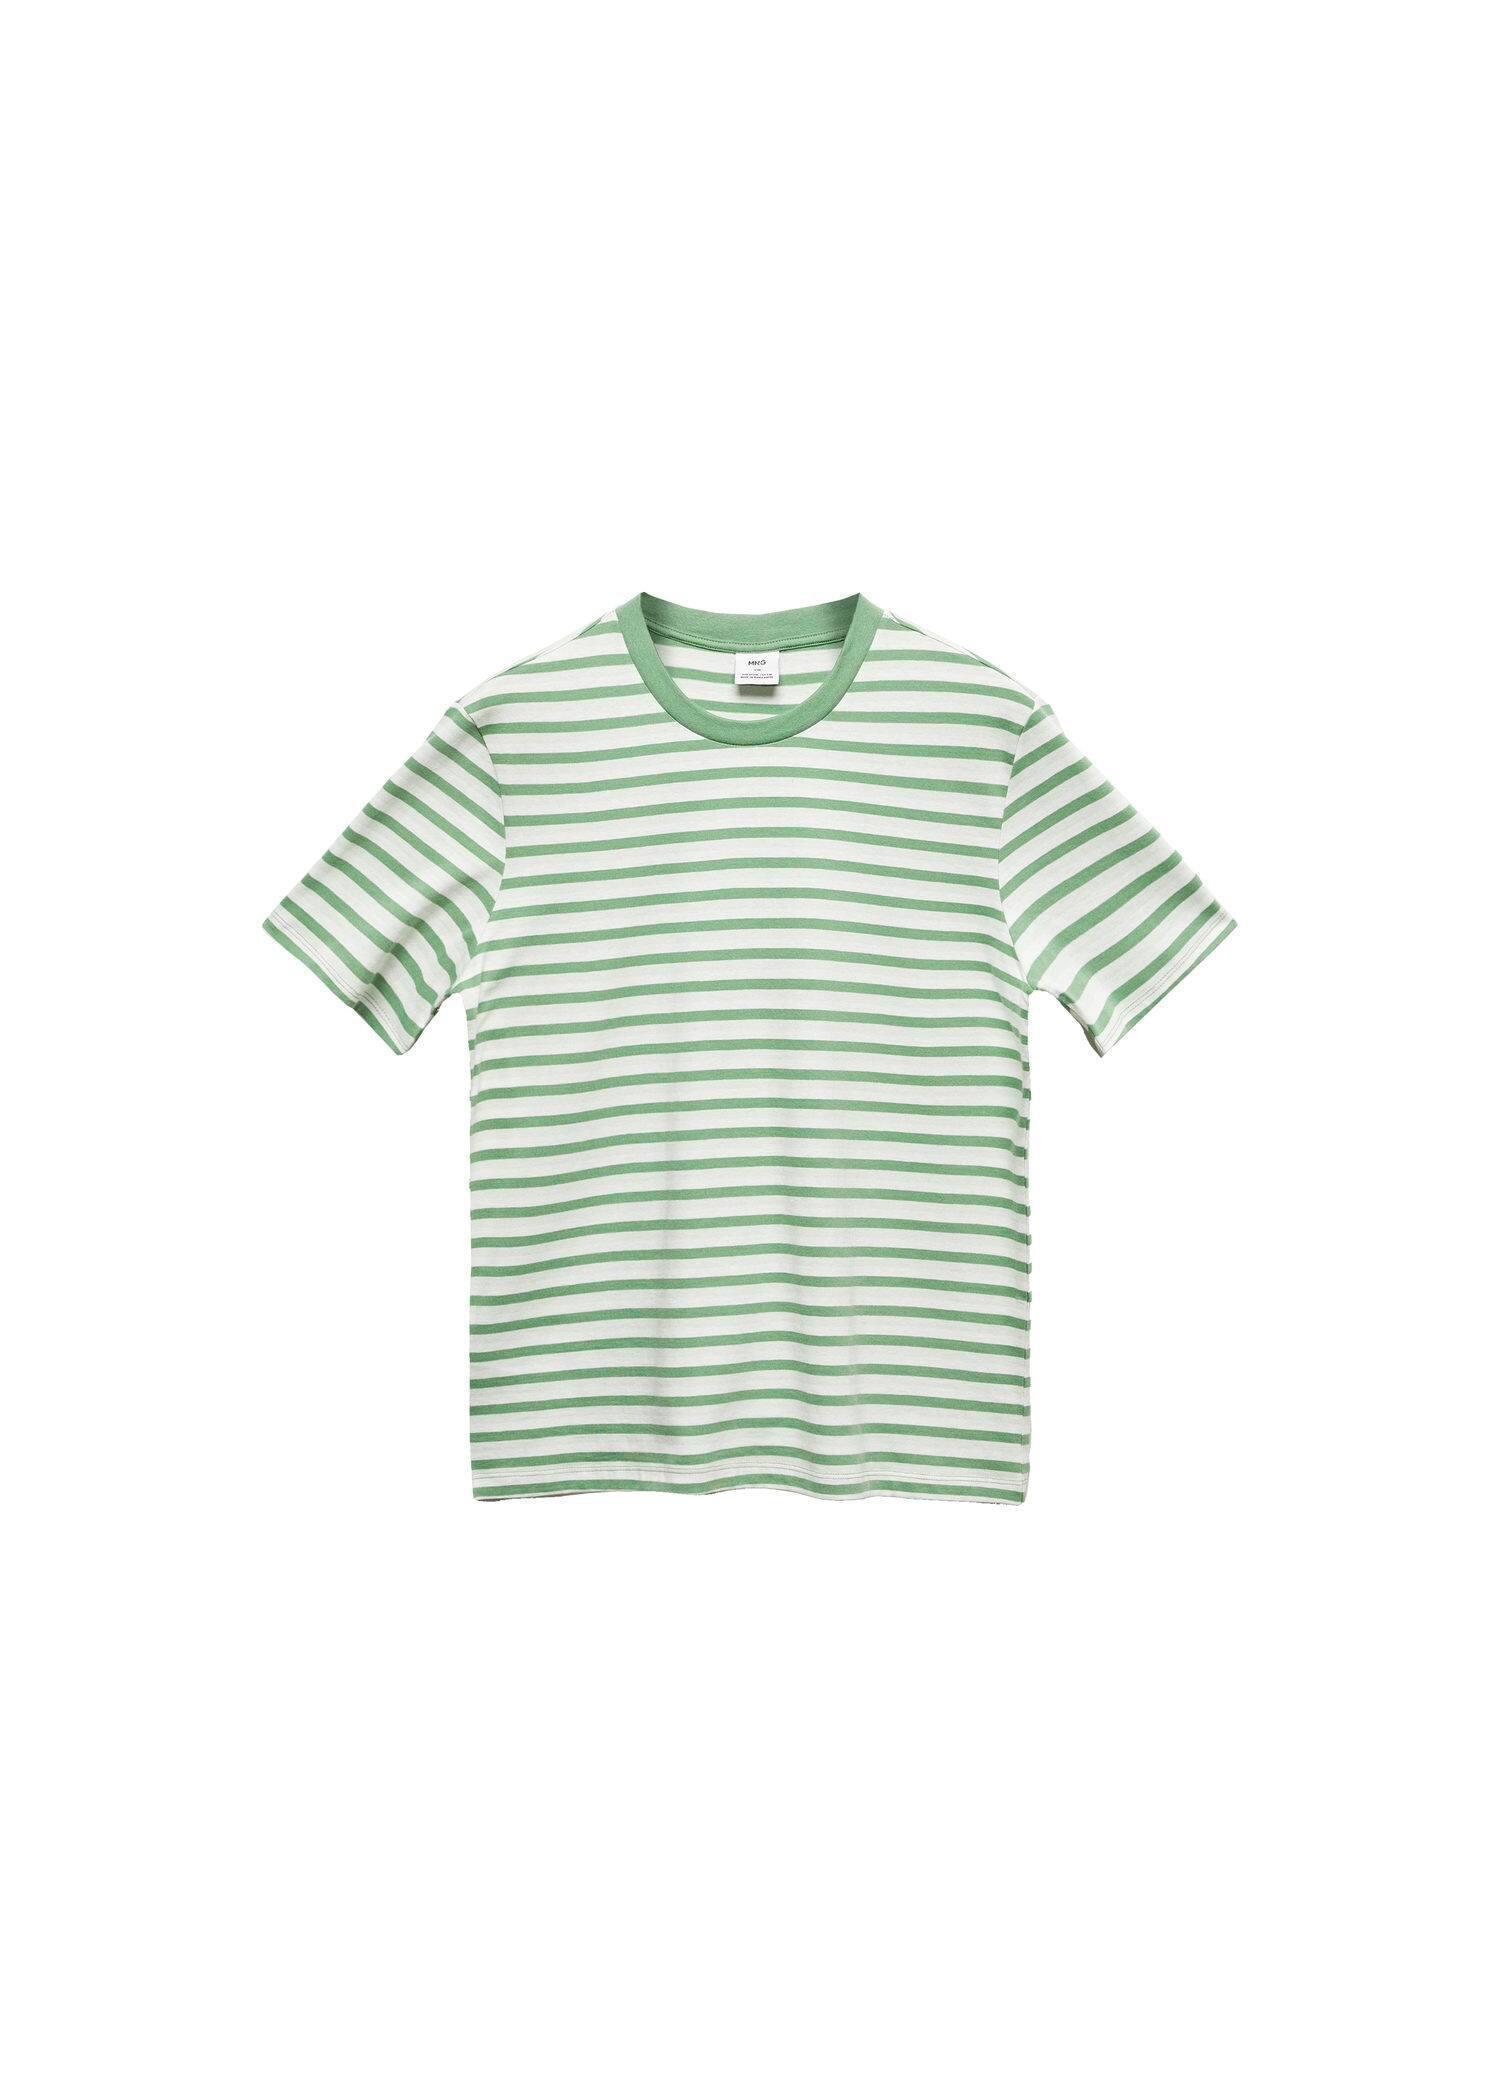 Mango - Green Cotton Printed T-Shirt